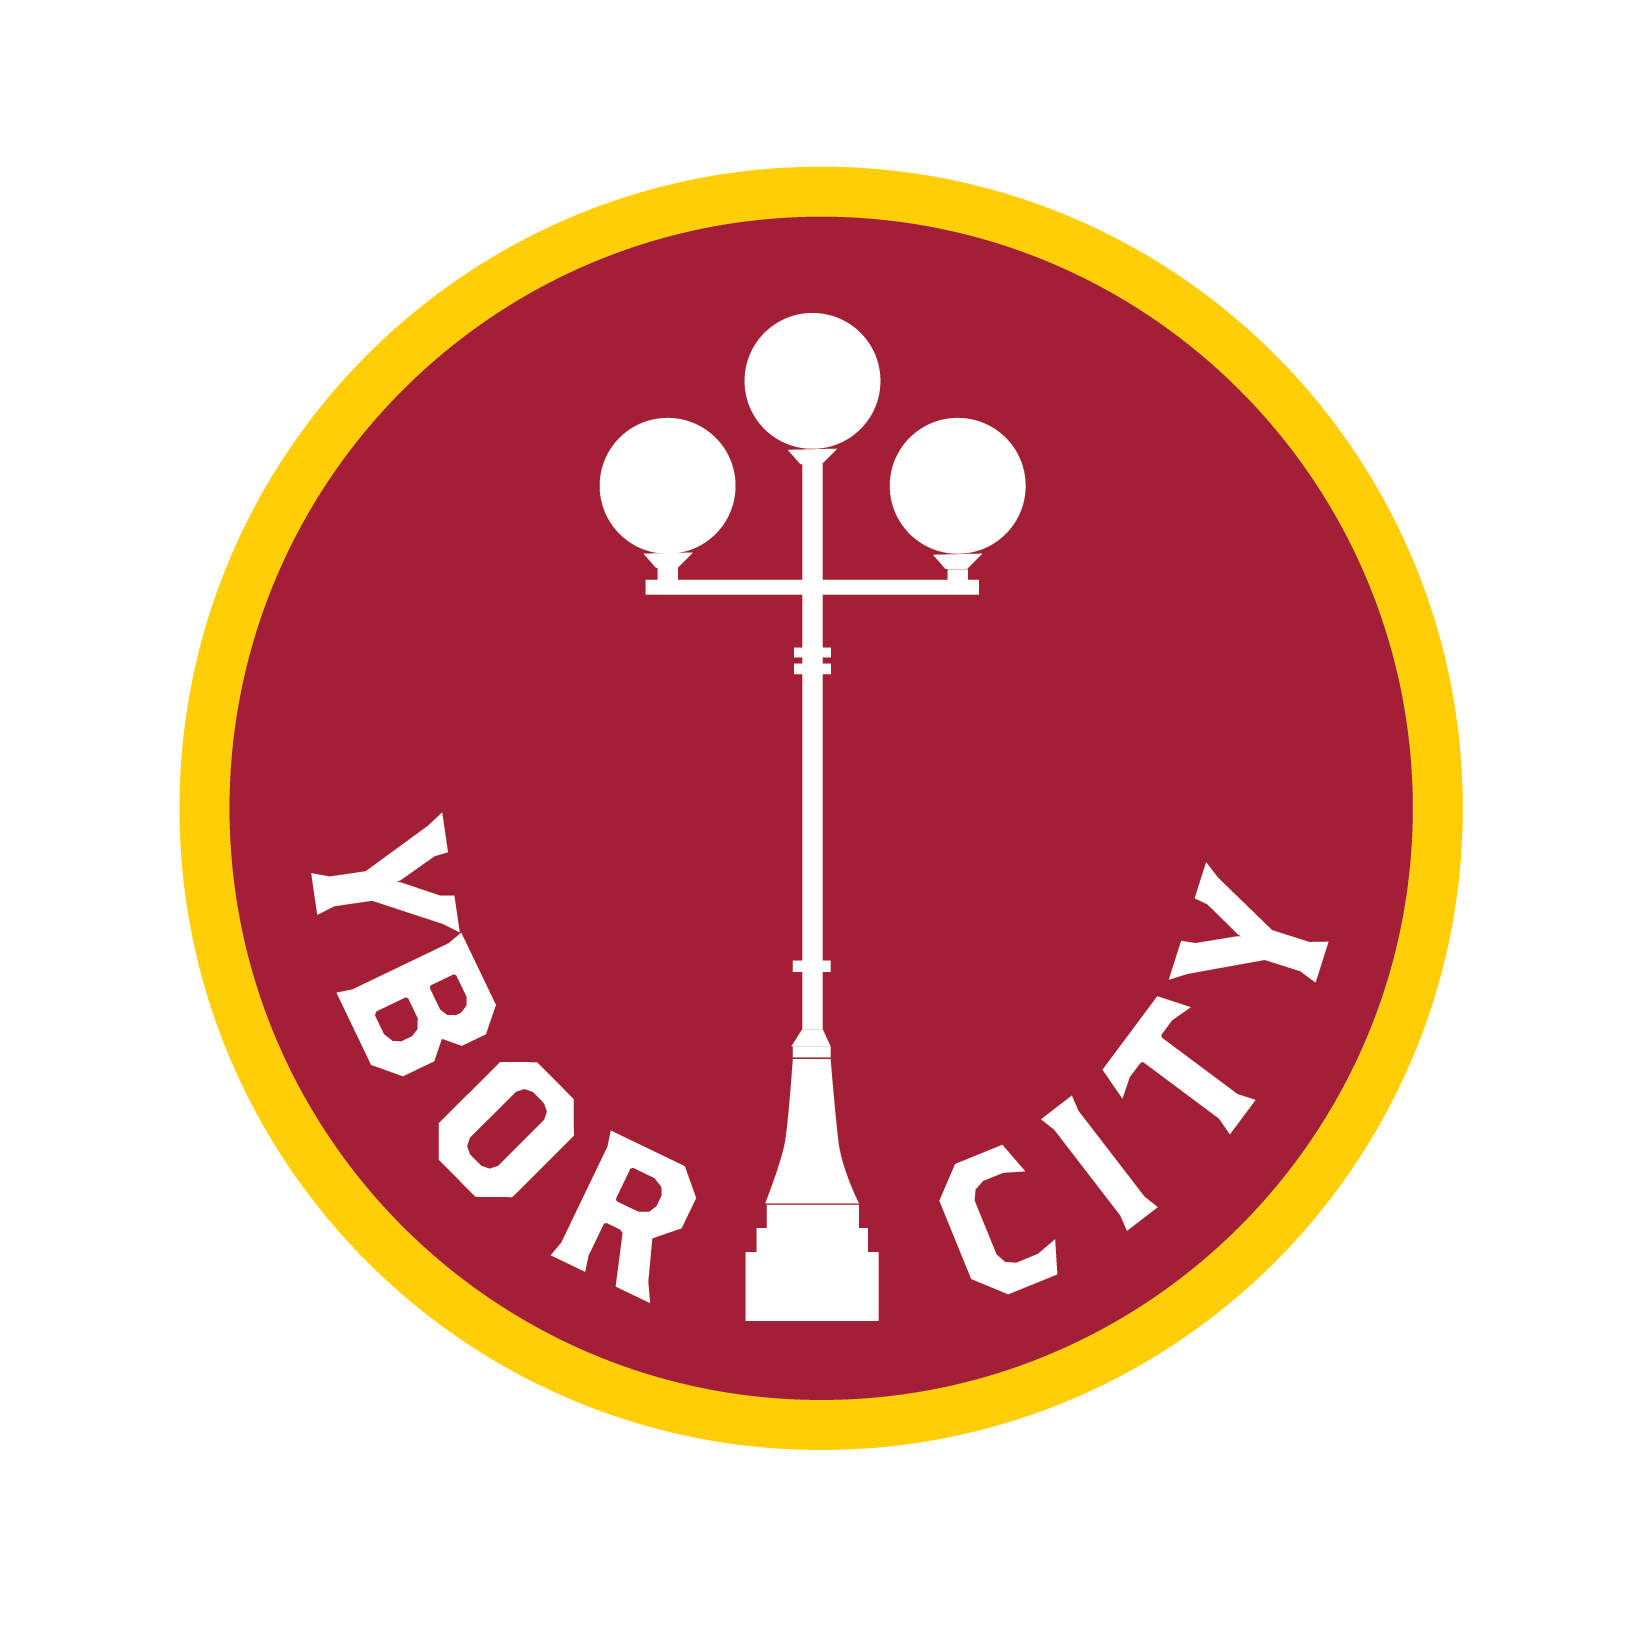 Downtown Historic Ybor City Map